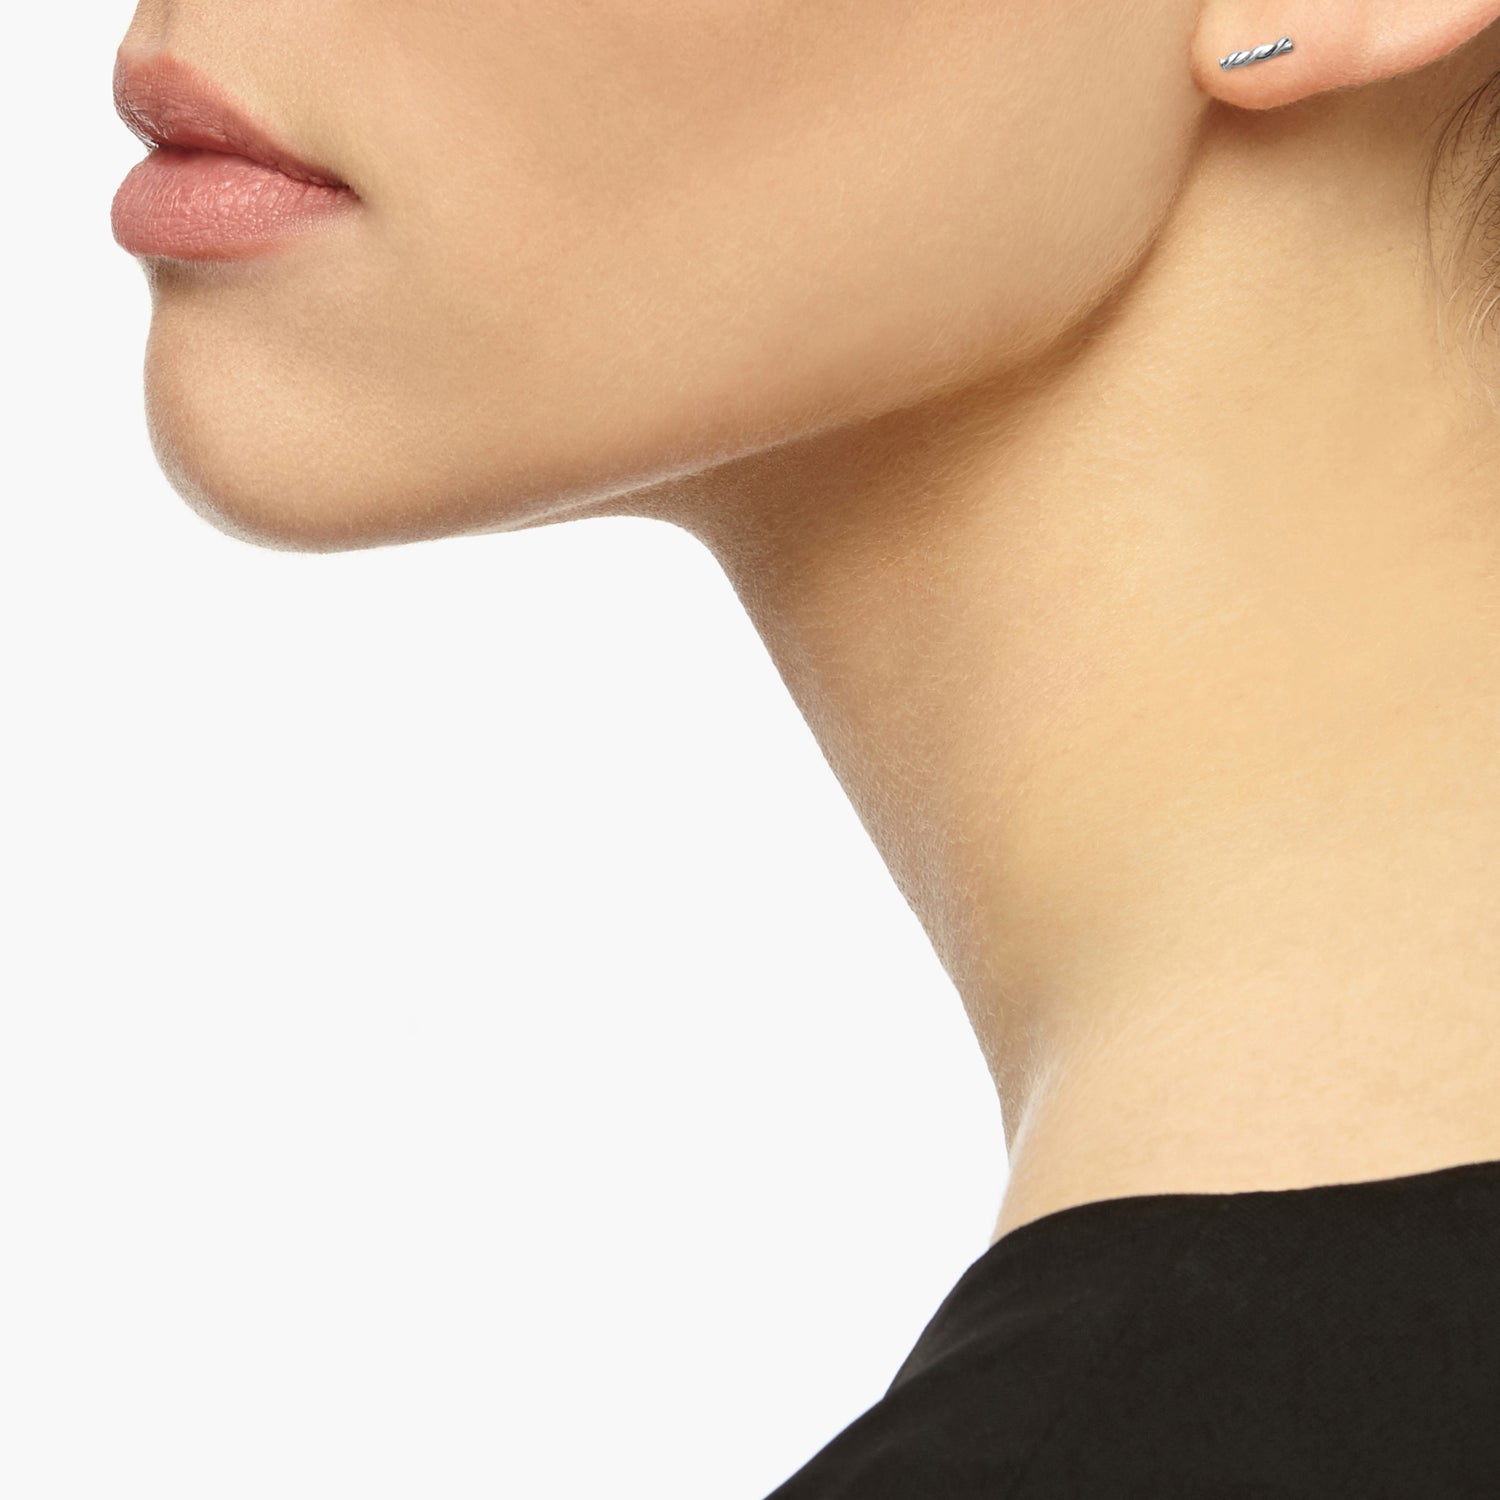 Single Mini Twisted Bar Stud Earring - Silver